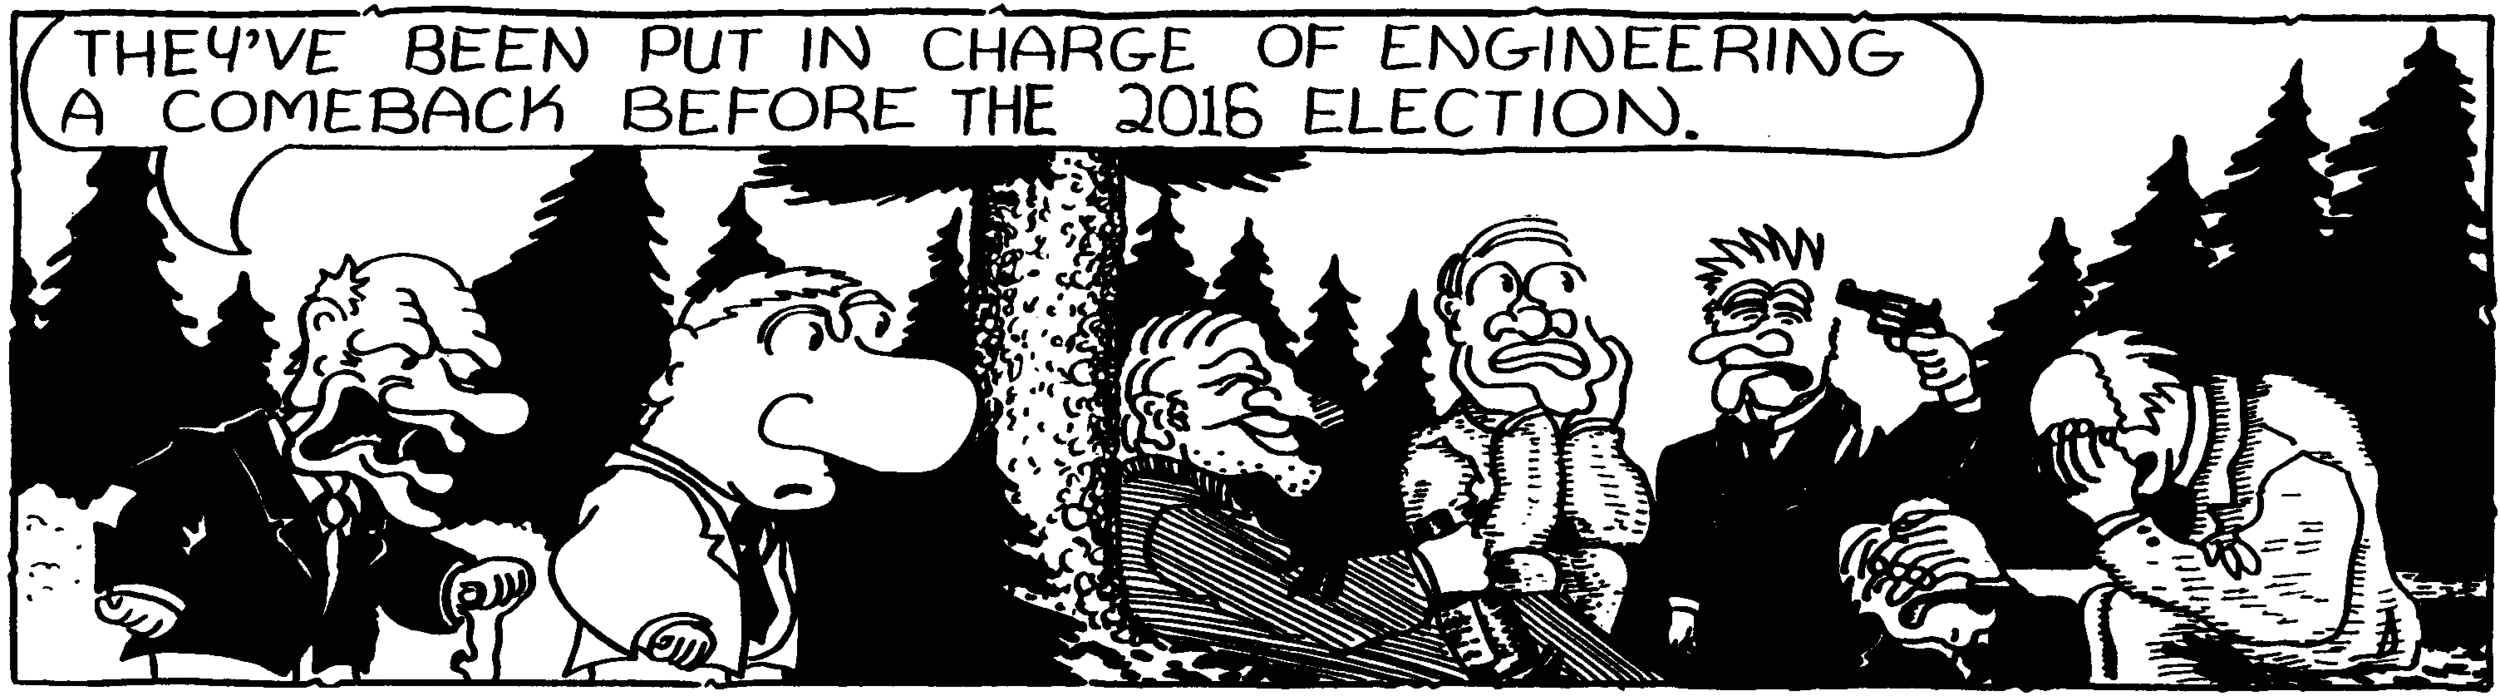 free cartoon politics politicians political 2016 election